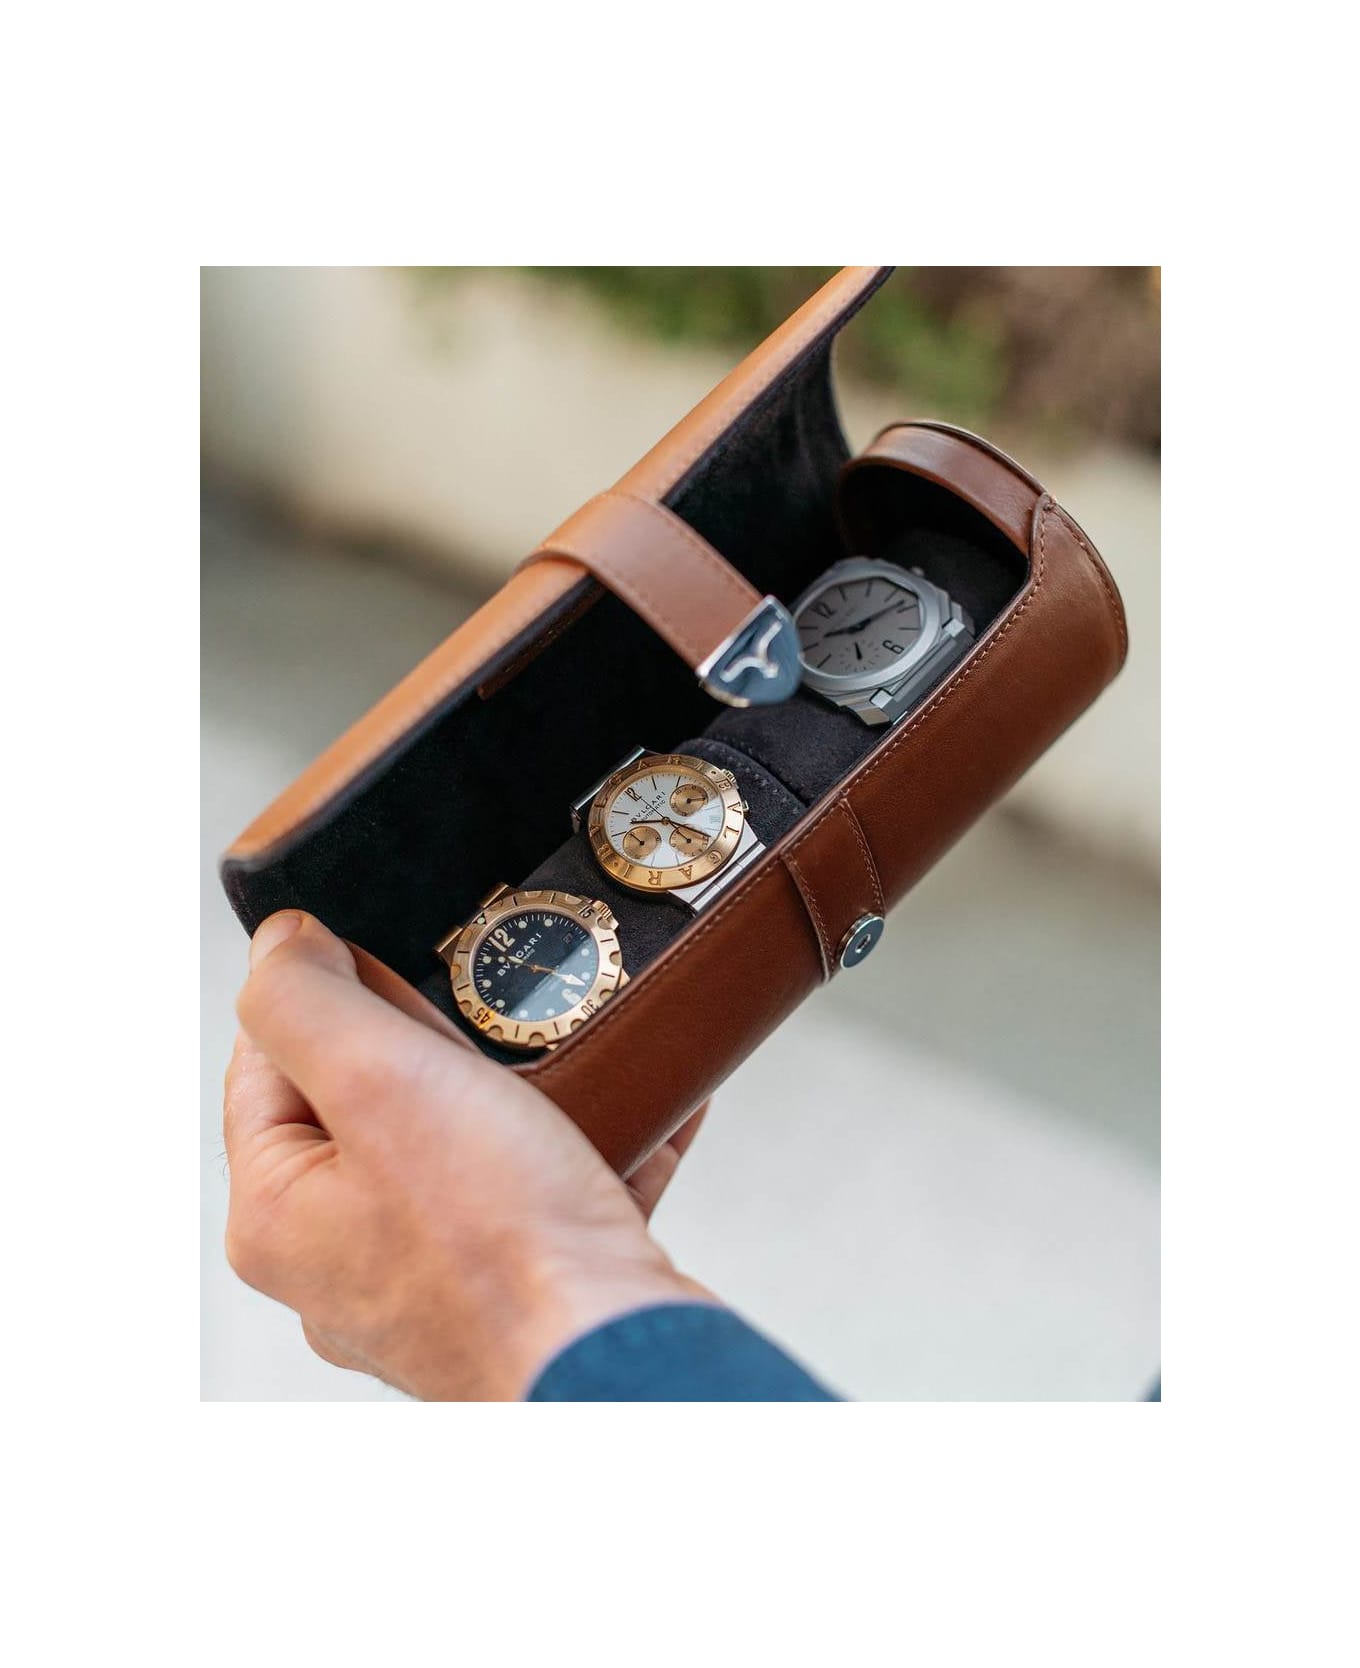 Larusmiani Travel Watch Case Watch - Sienna 腕時計